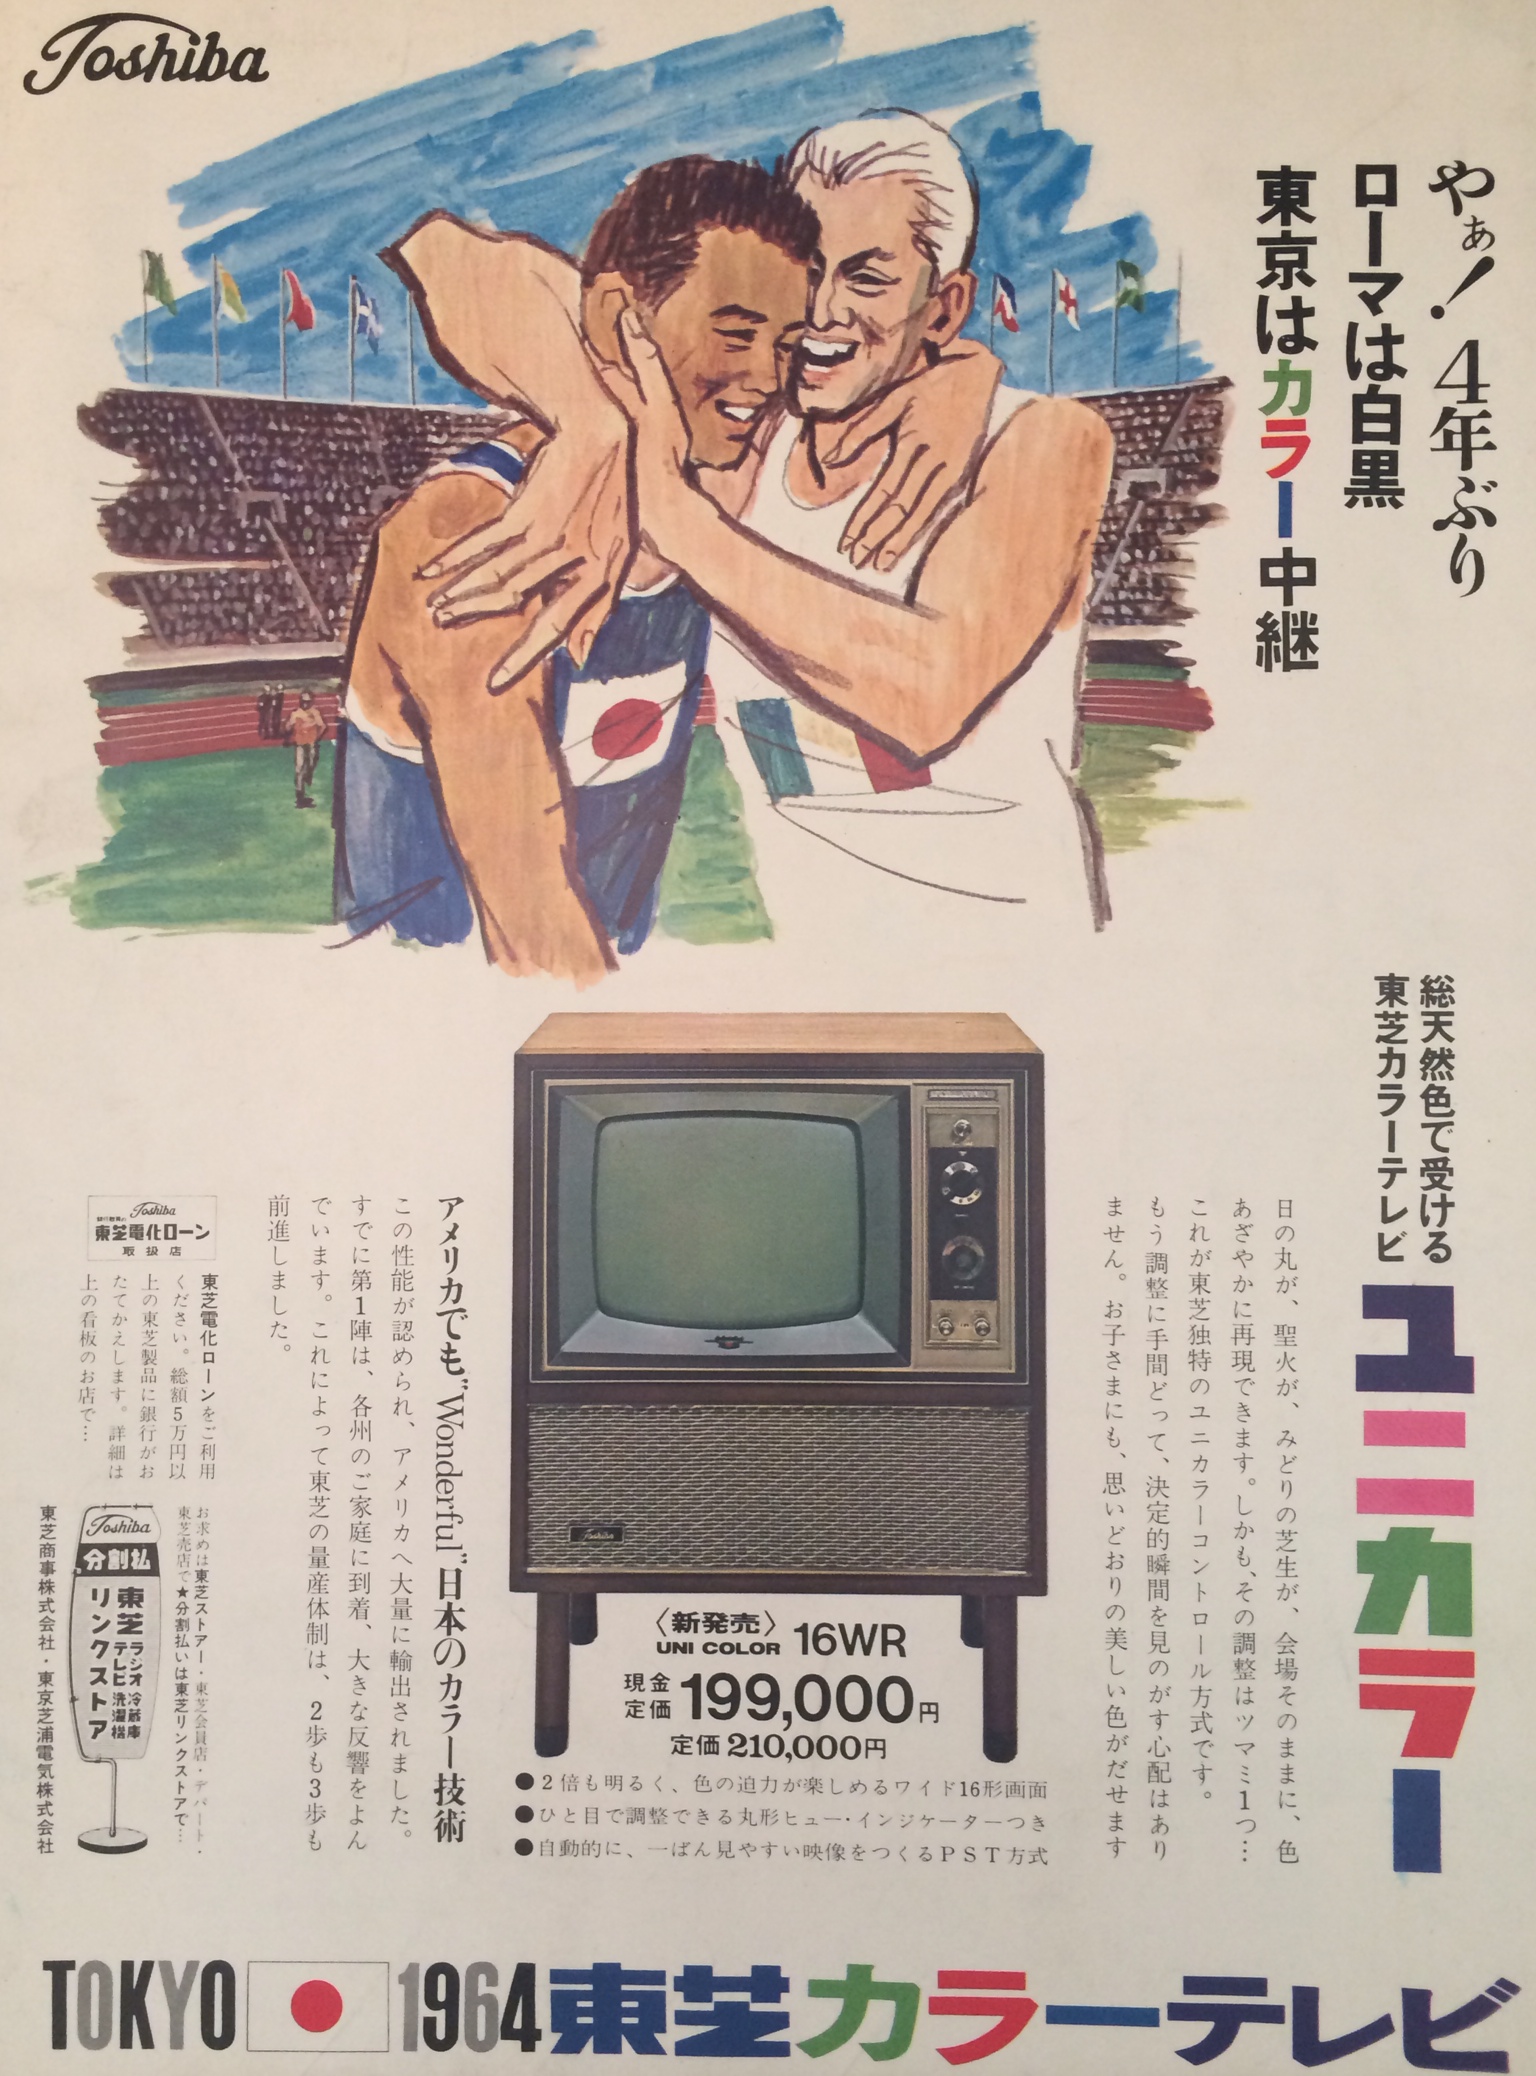 The Three Sacred Treasures of Post-War Japan: a television, a